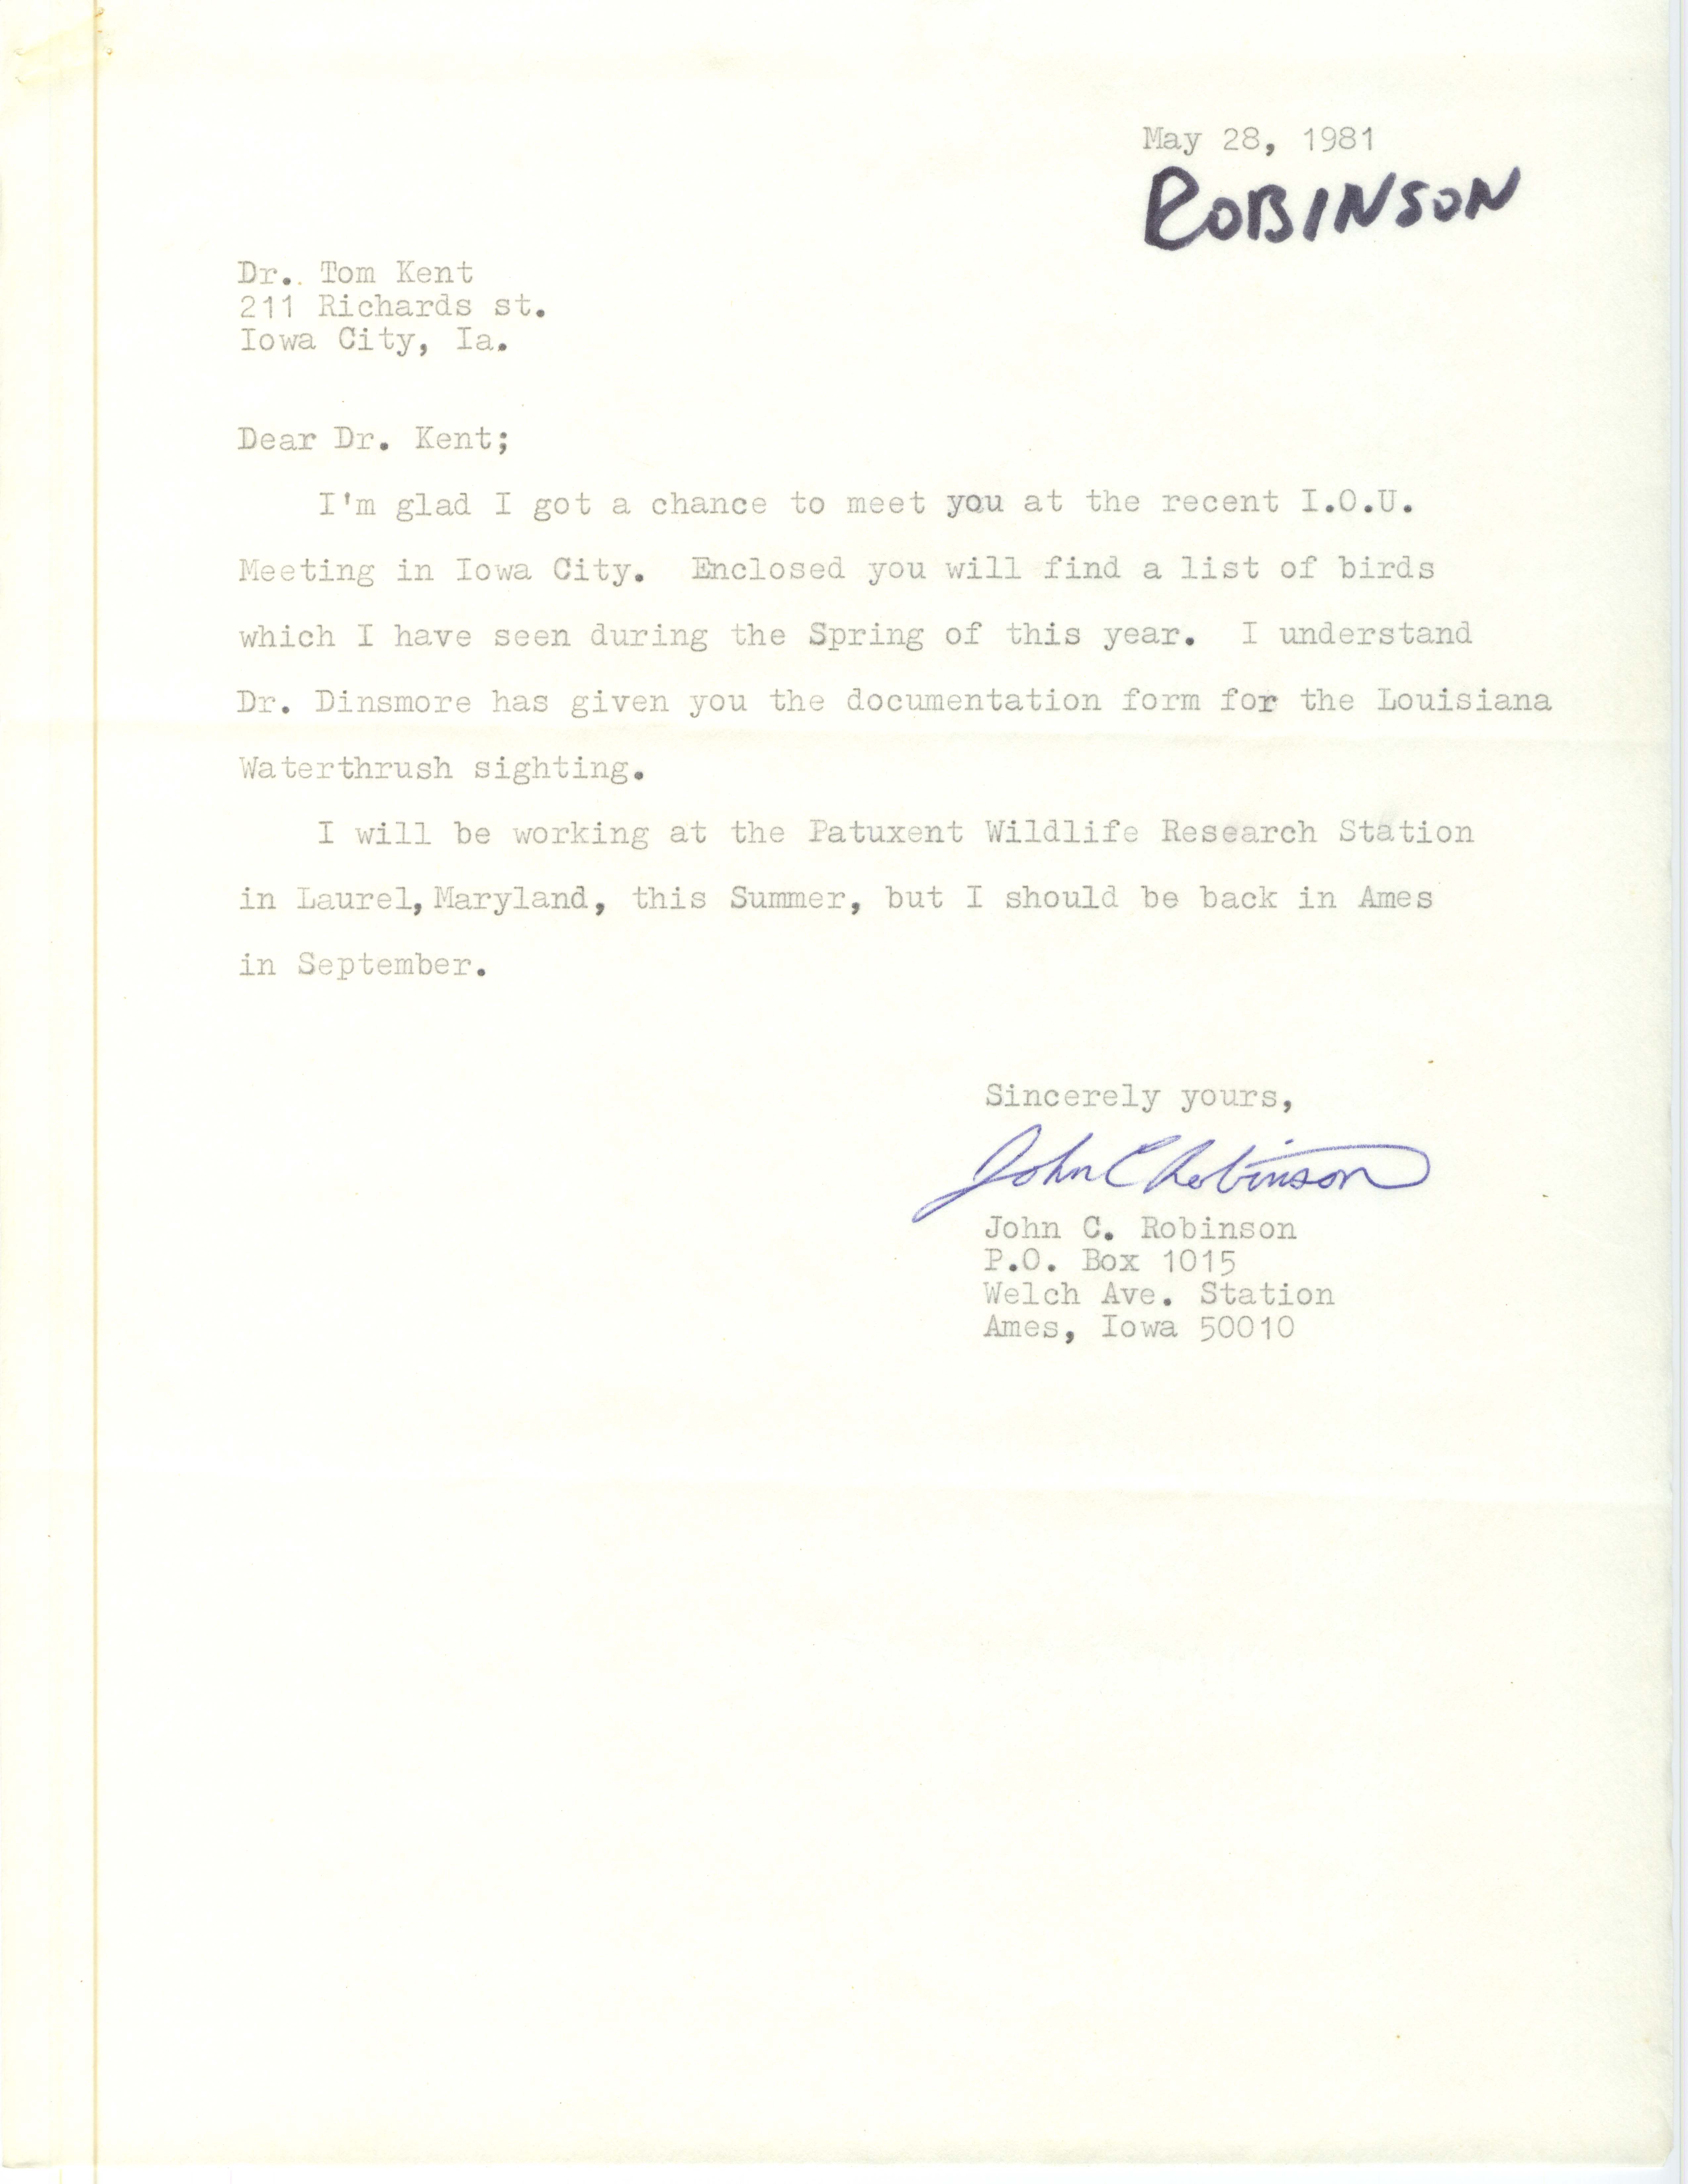 John Robinson letter to Thomas Kent regarding spring bird list, May 28, 1981